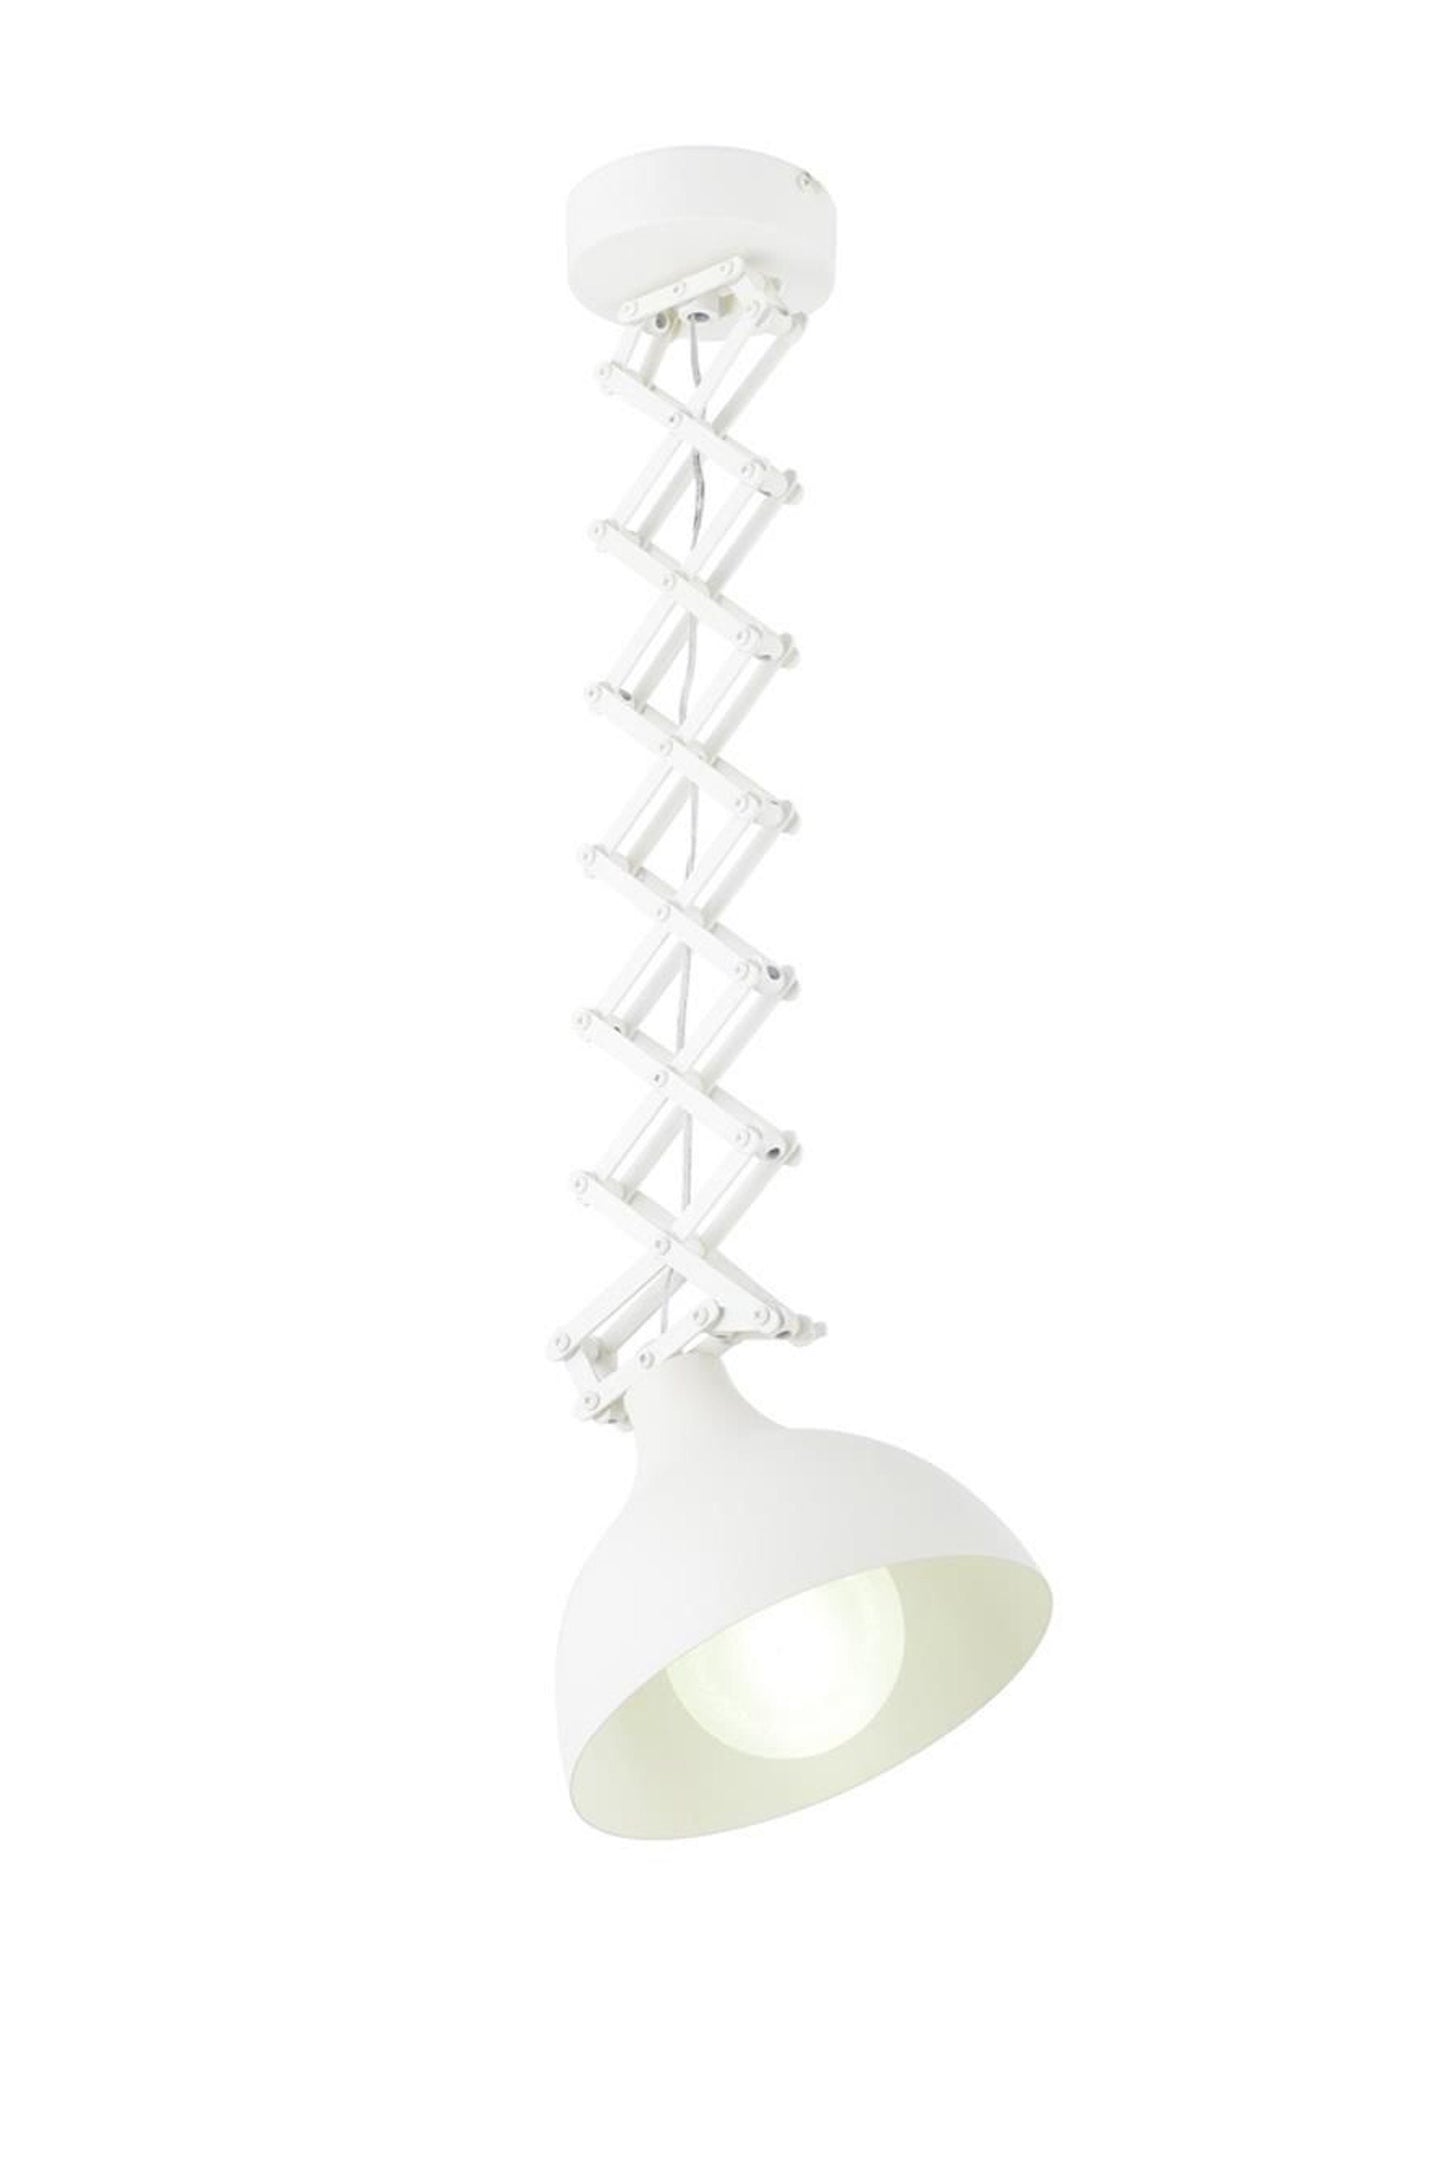 SCISSOR PENDANT LIGHT, Industrial Lighting, Hanging Loft Lamp, Hanging Home Lighting, Retro, Ceiling Pendant Light, White, Scissor, White